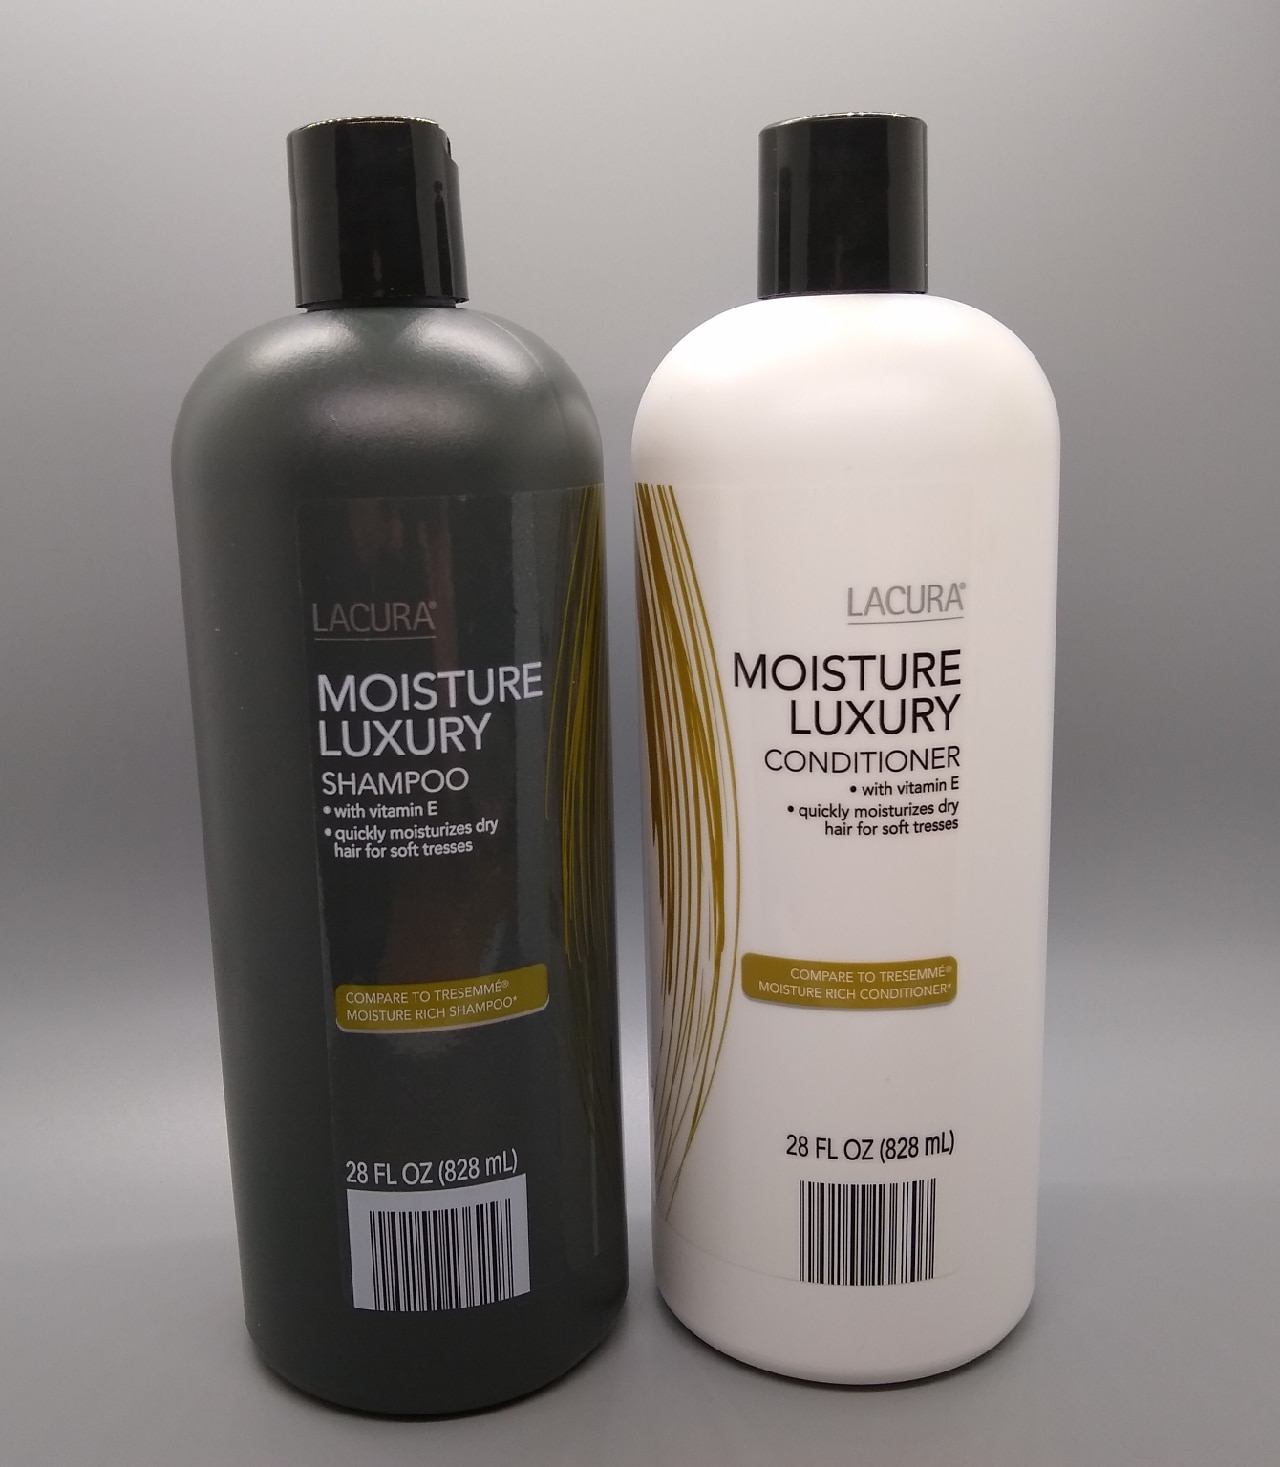 Lacura Moisture Luxury Shampoo and Conditioner